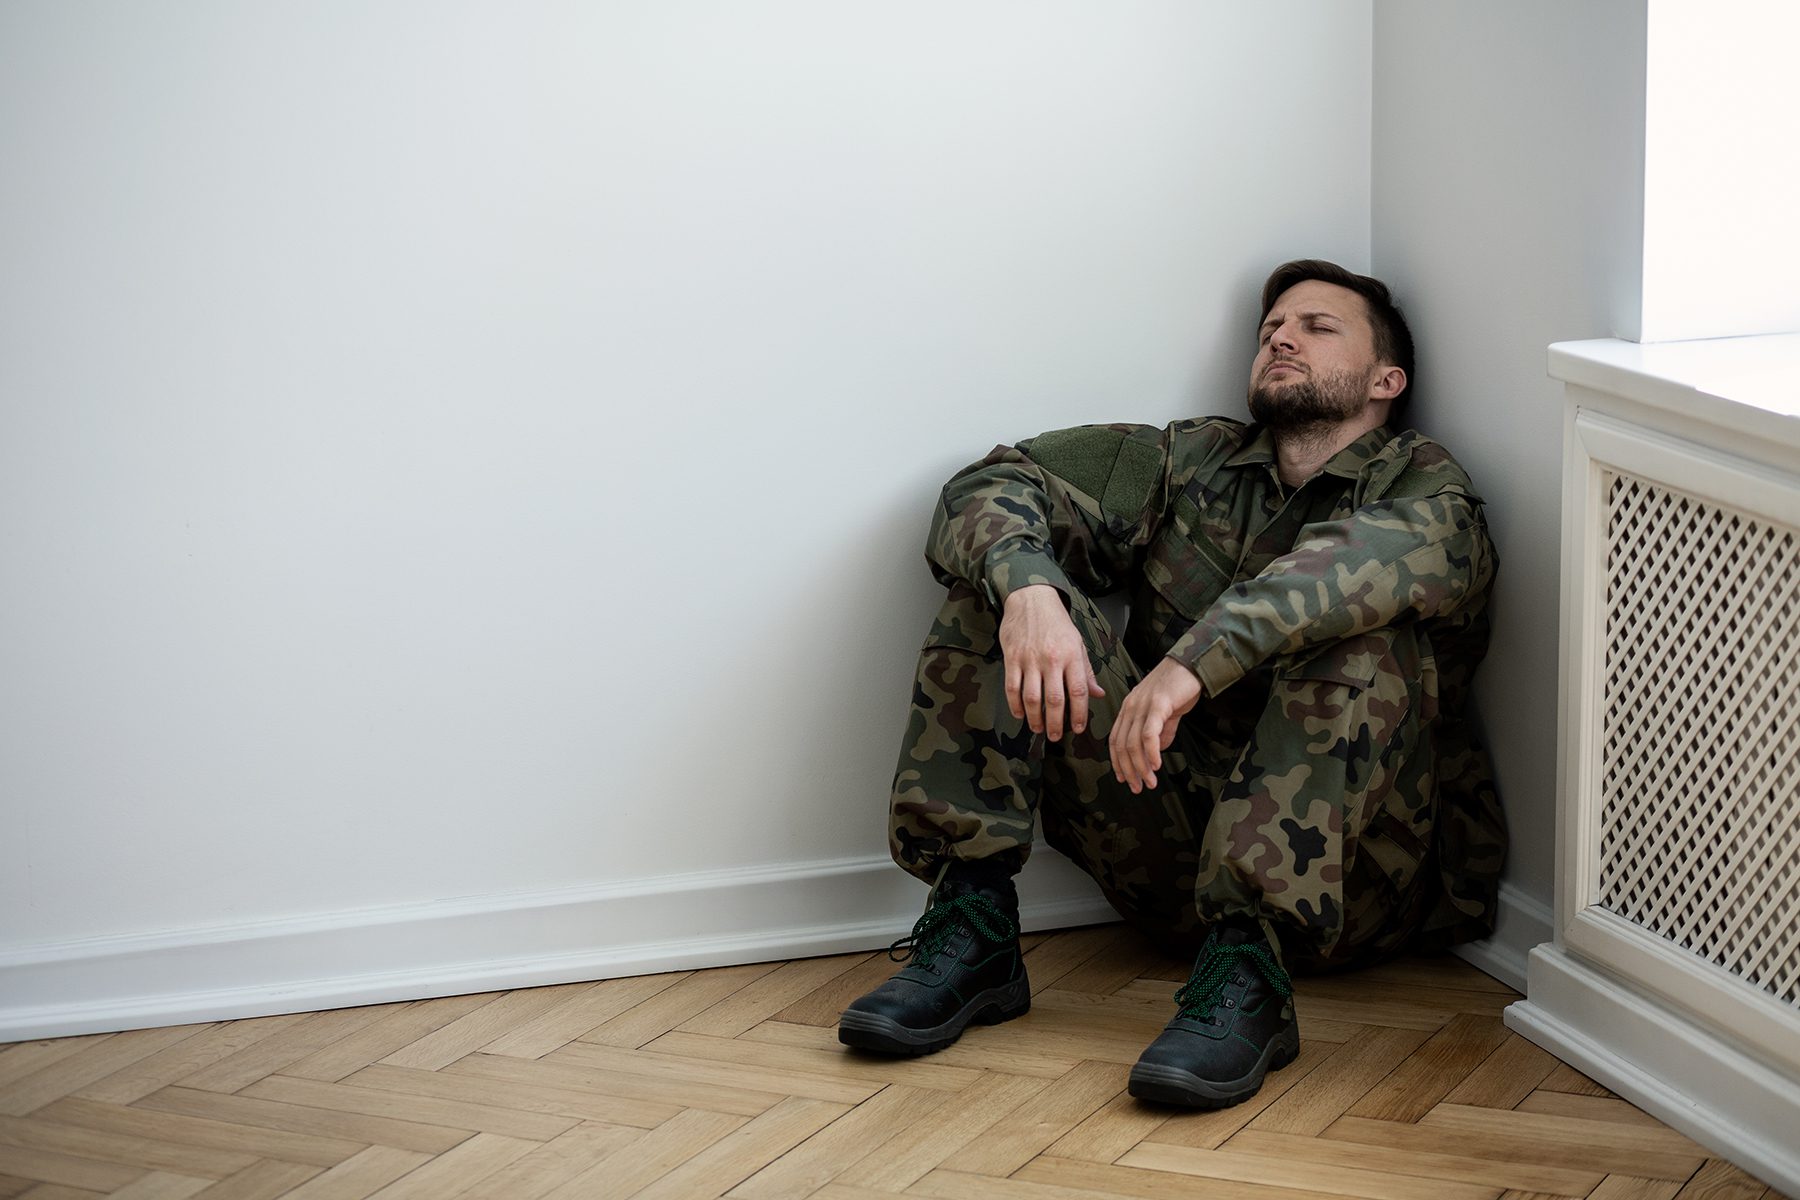 Suicide Prevention - PTSD Soldier